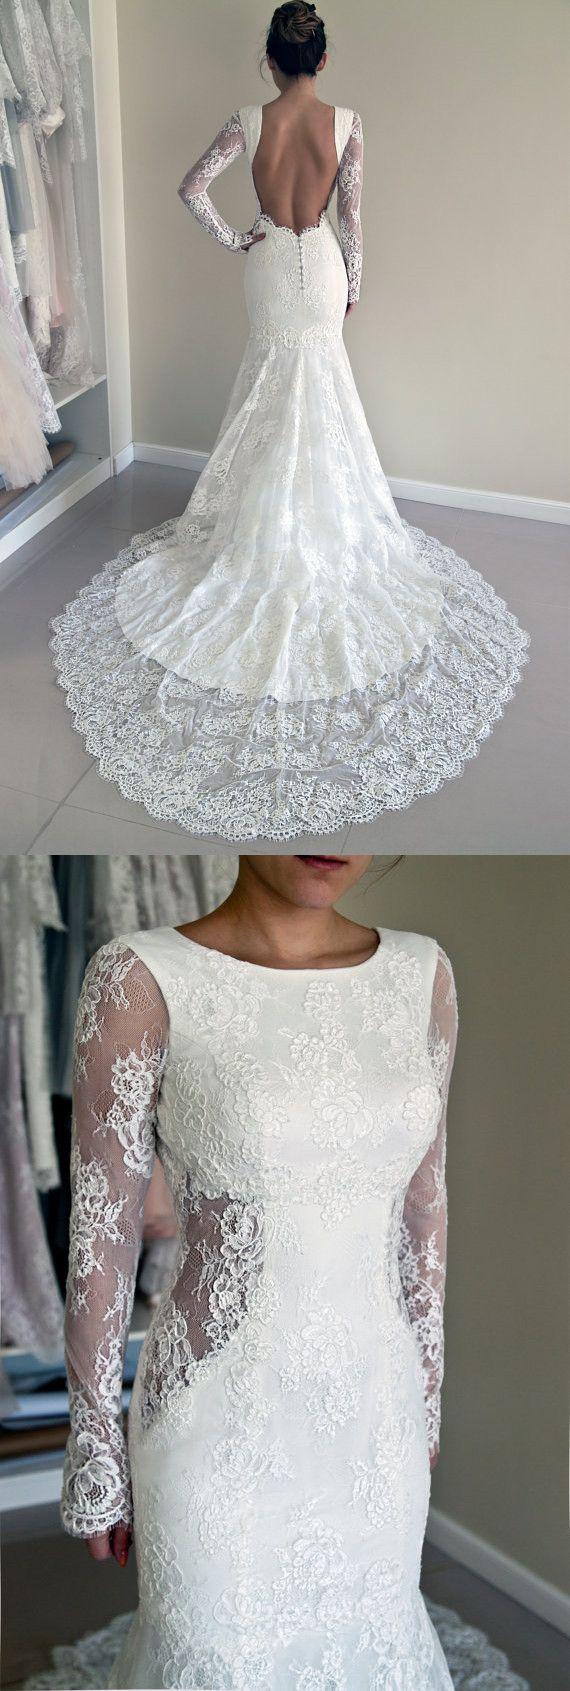 زفاف - Stunning Jewel Long Illusion Sleeves Court Train Sheath White Wedding Dress With Open Back